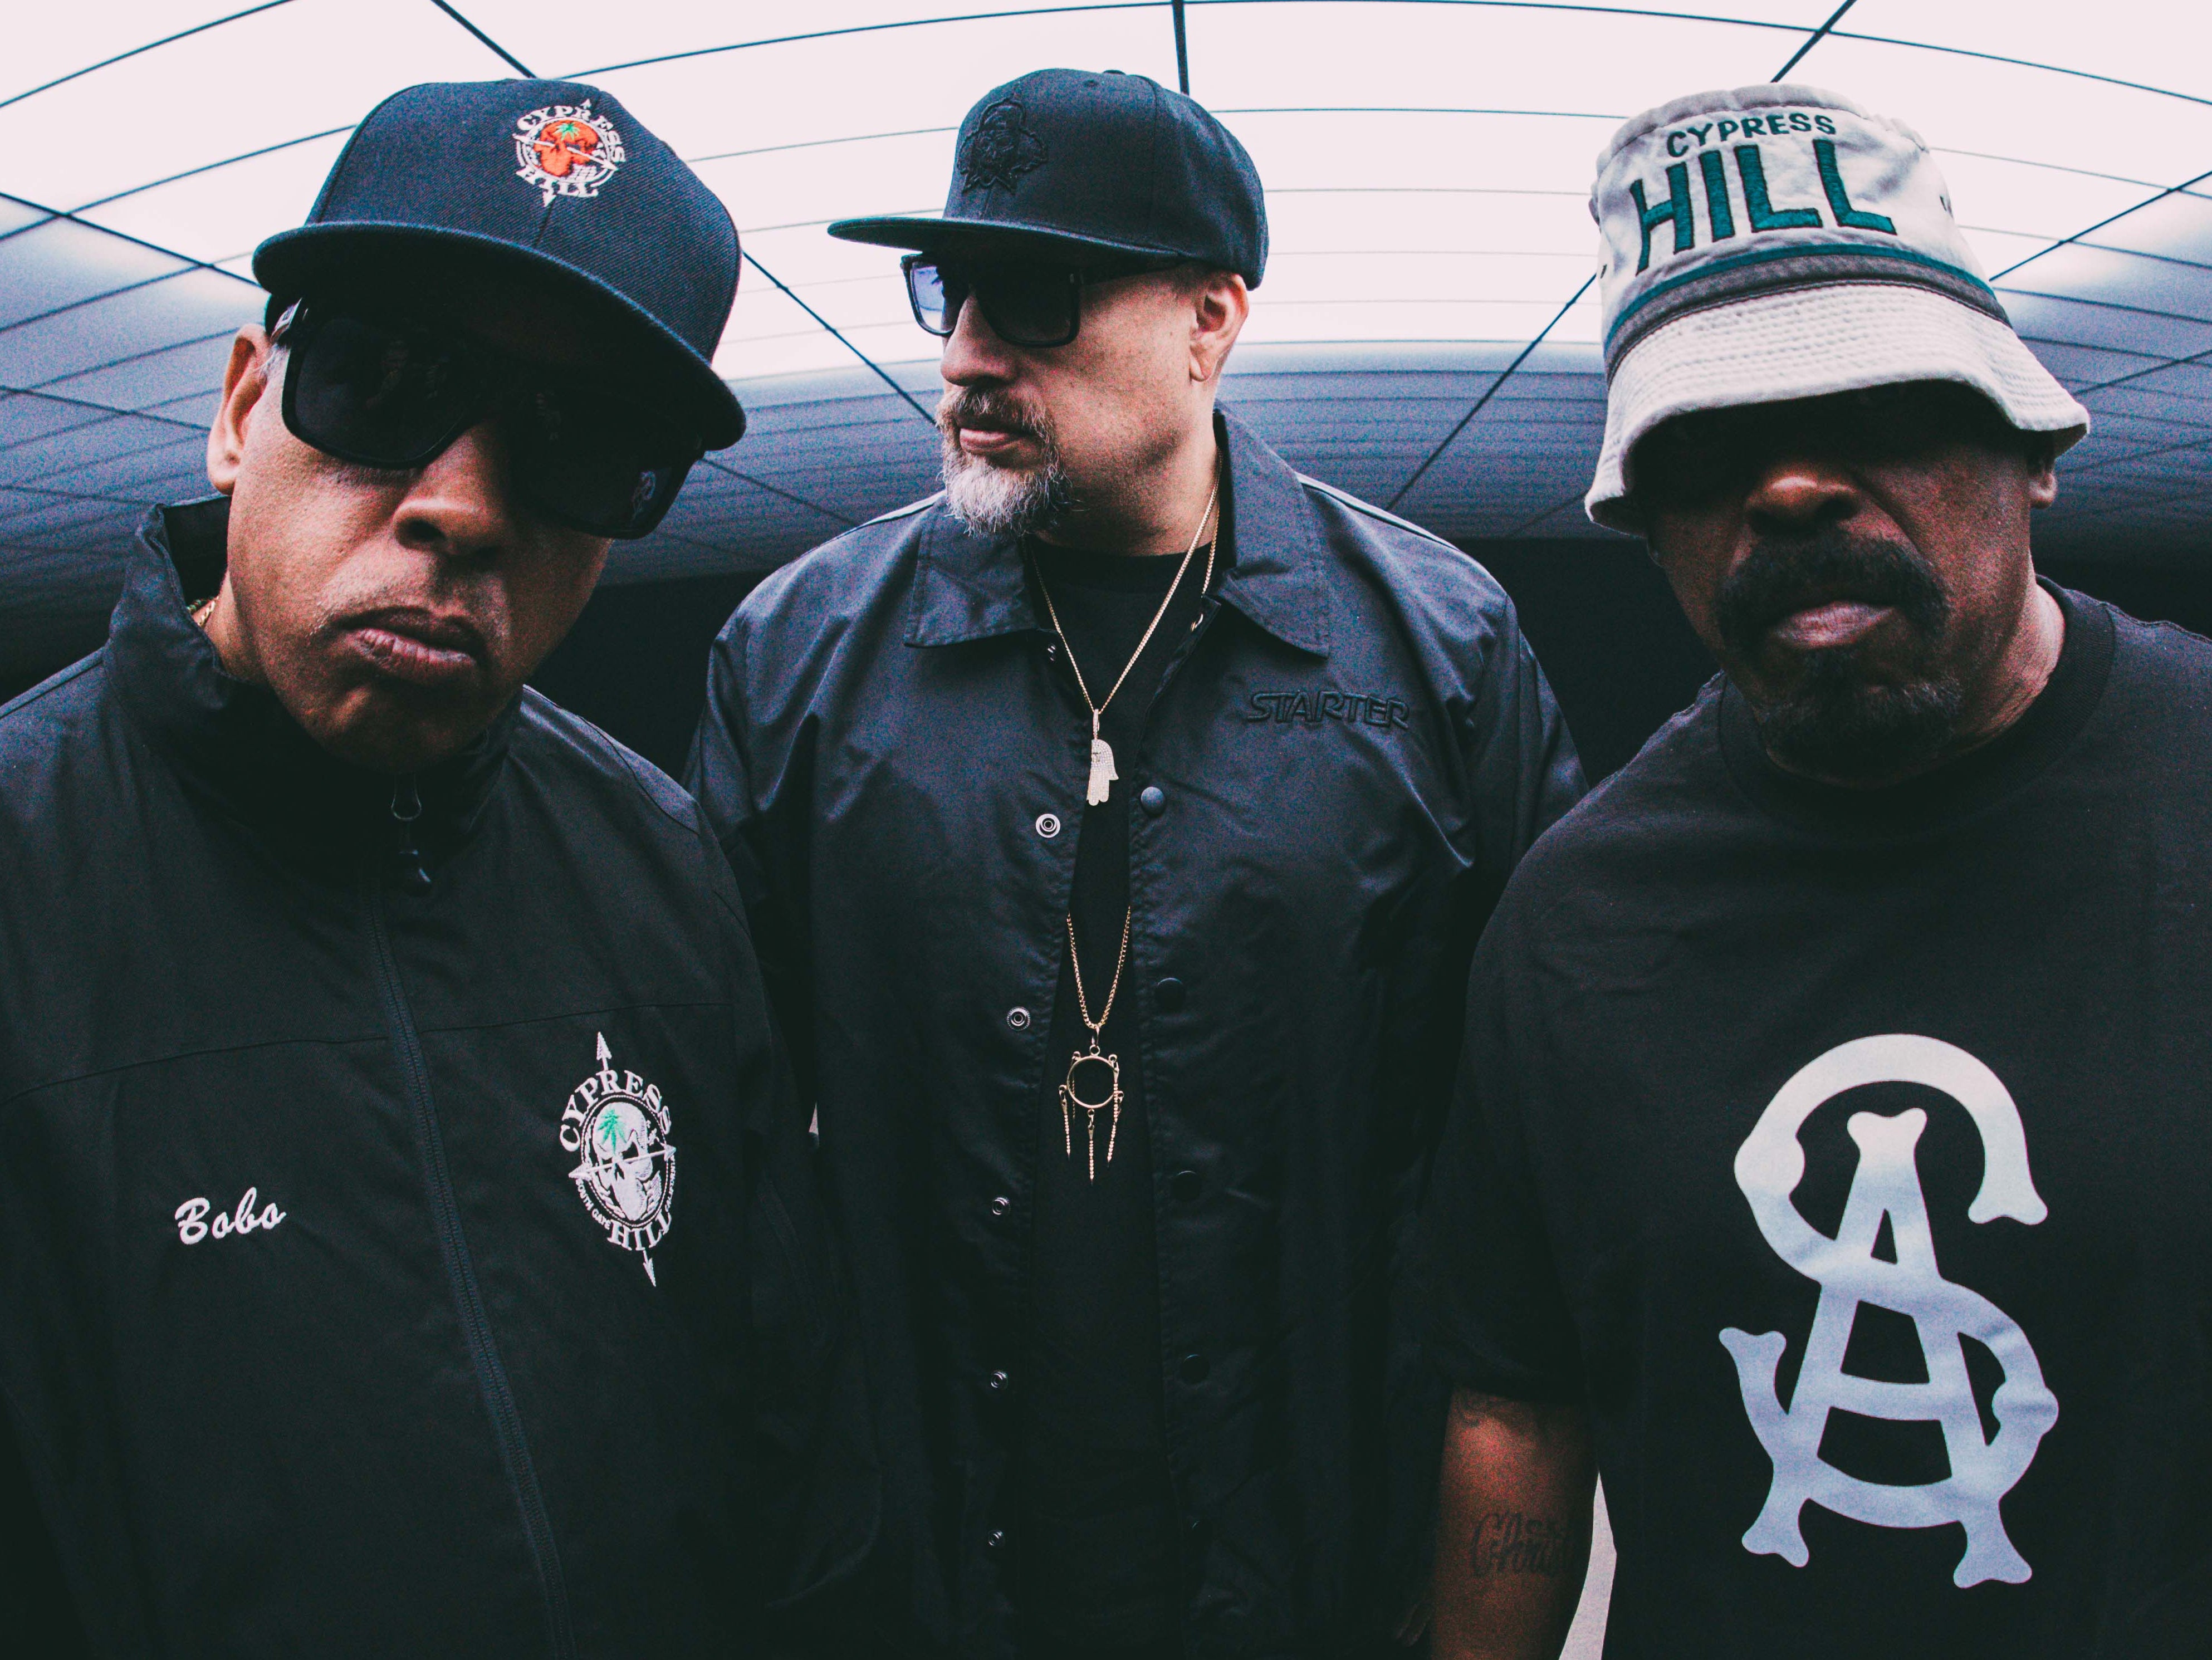 Cypress Hill [オフィシャル プロモステッカー]